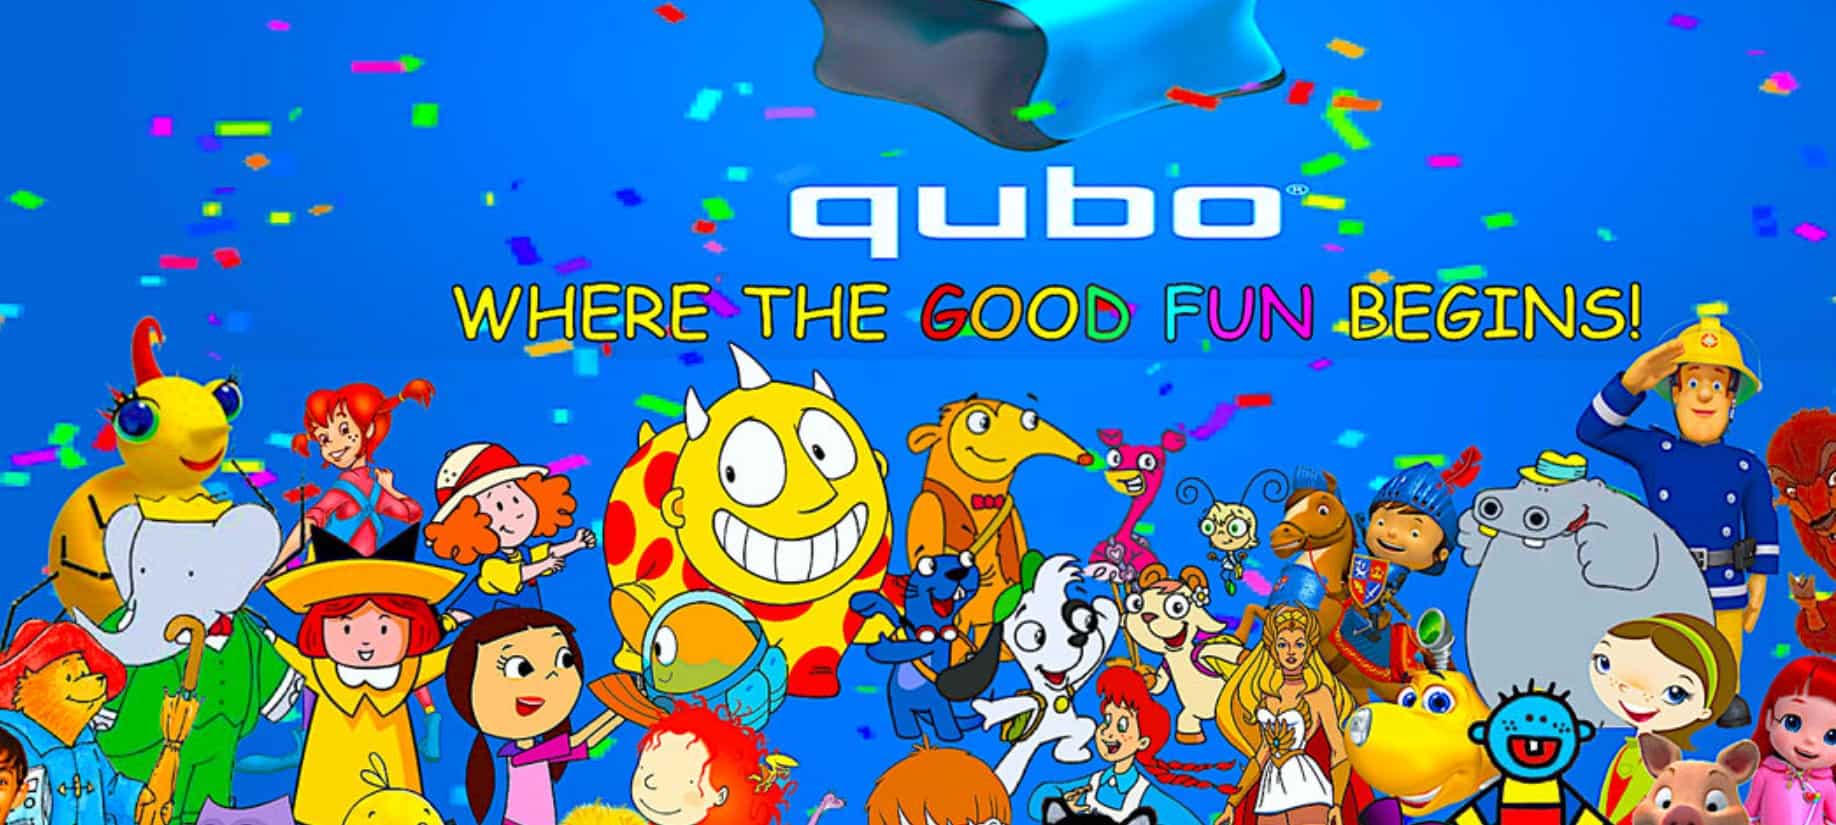 Why did Qubo Shut Down?